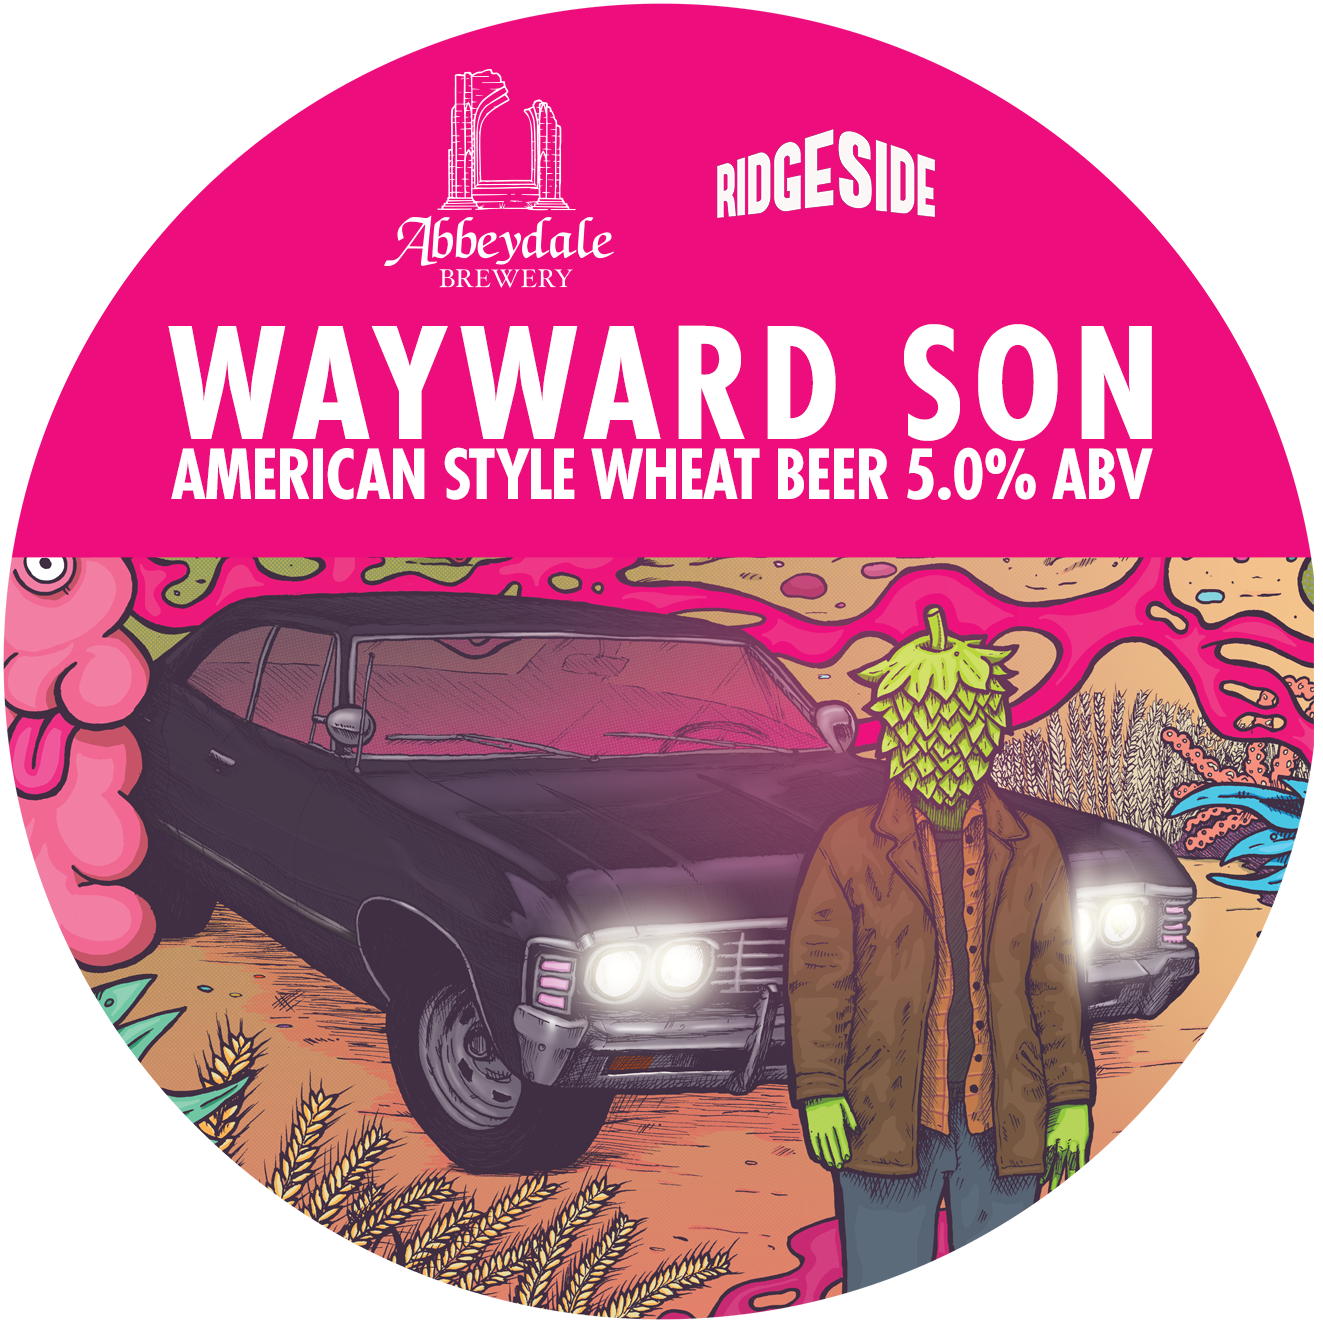 Craft Beer Label Illustration - Abbeydale Brewery x Ridgeside Brewery - Wayward Son - American Style Wheat Beer Keg Artwork